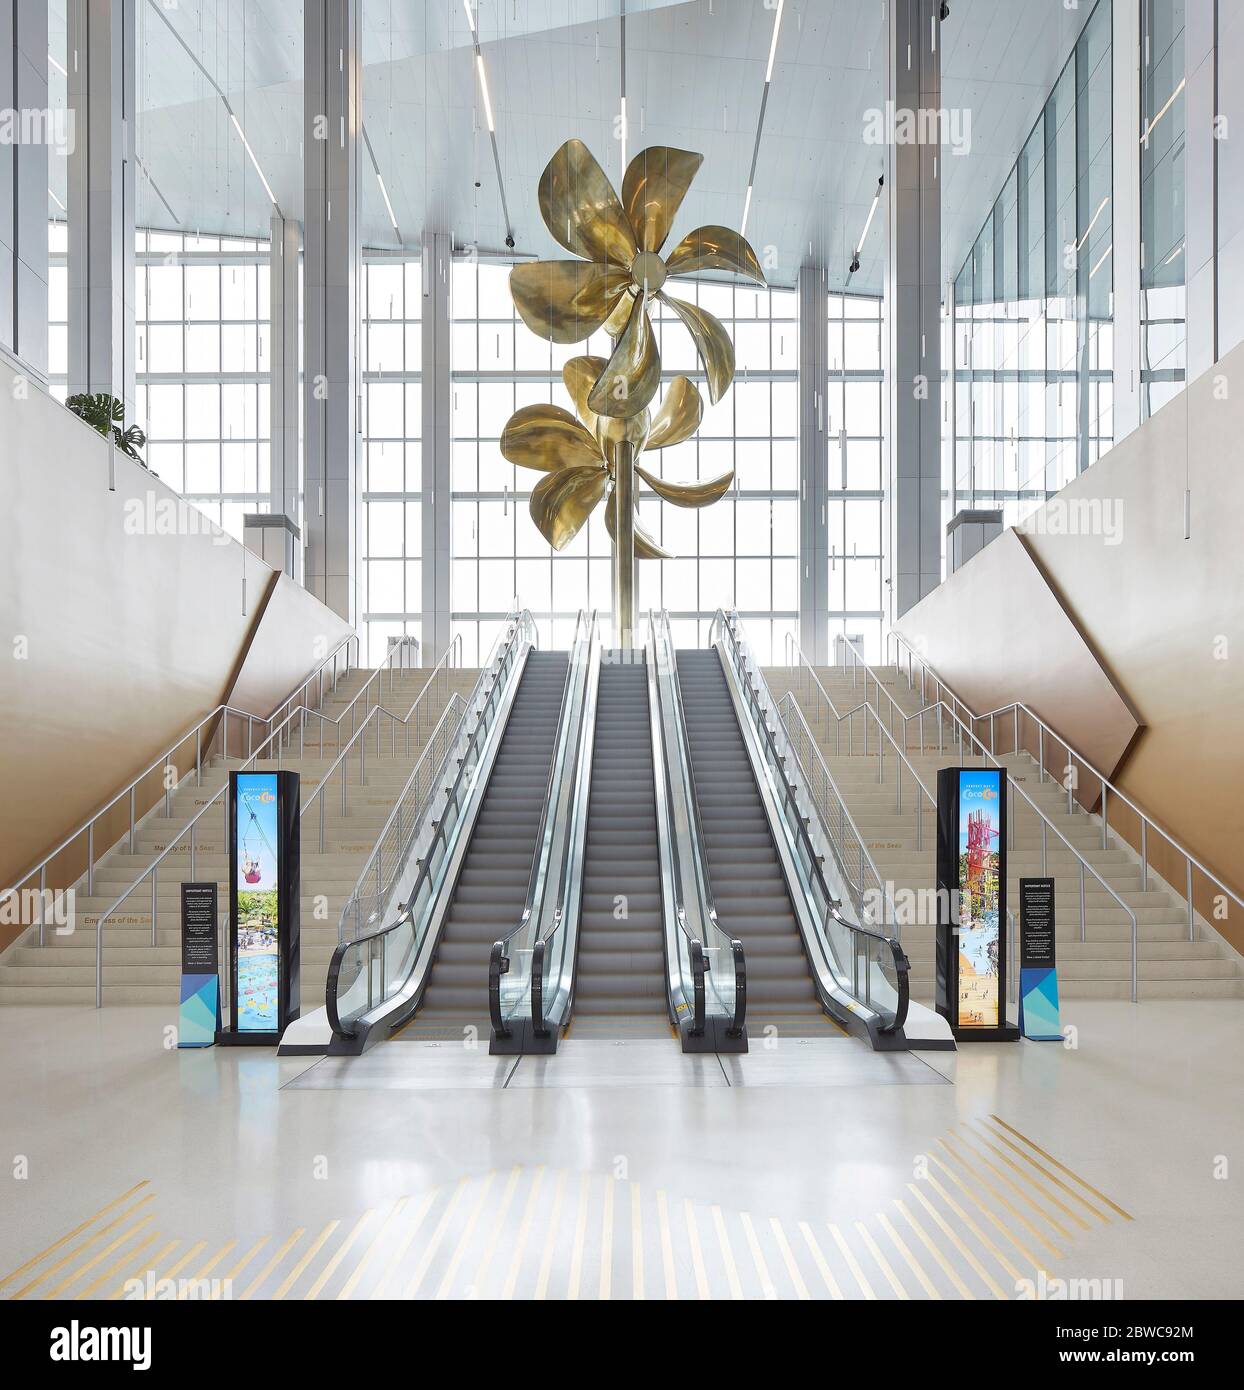 Interior view of escalators with sculptural propellor artwork. Royal Caribbean Miami Cruise Terminal, Miami, United States. Architect: Broadway Malyan Stock Photo